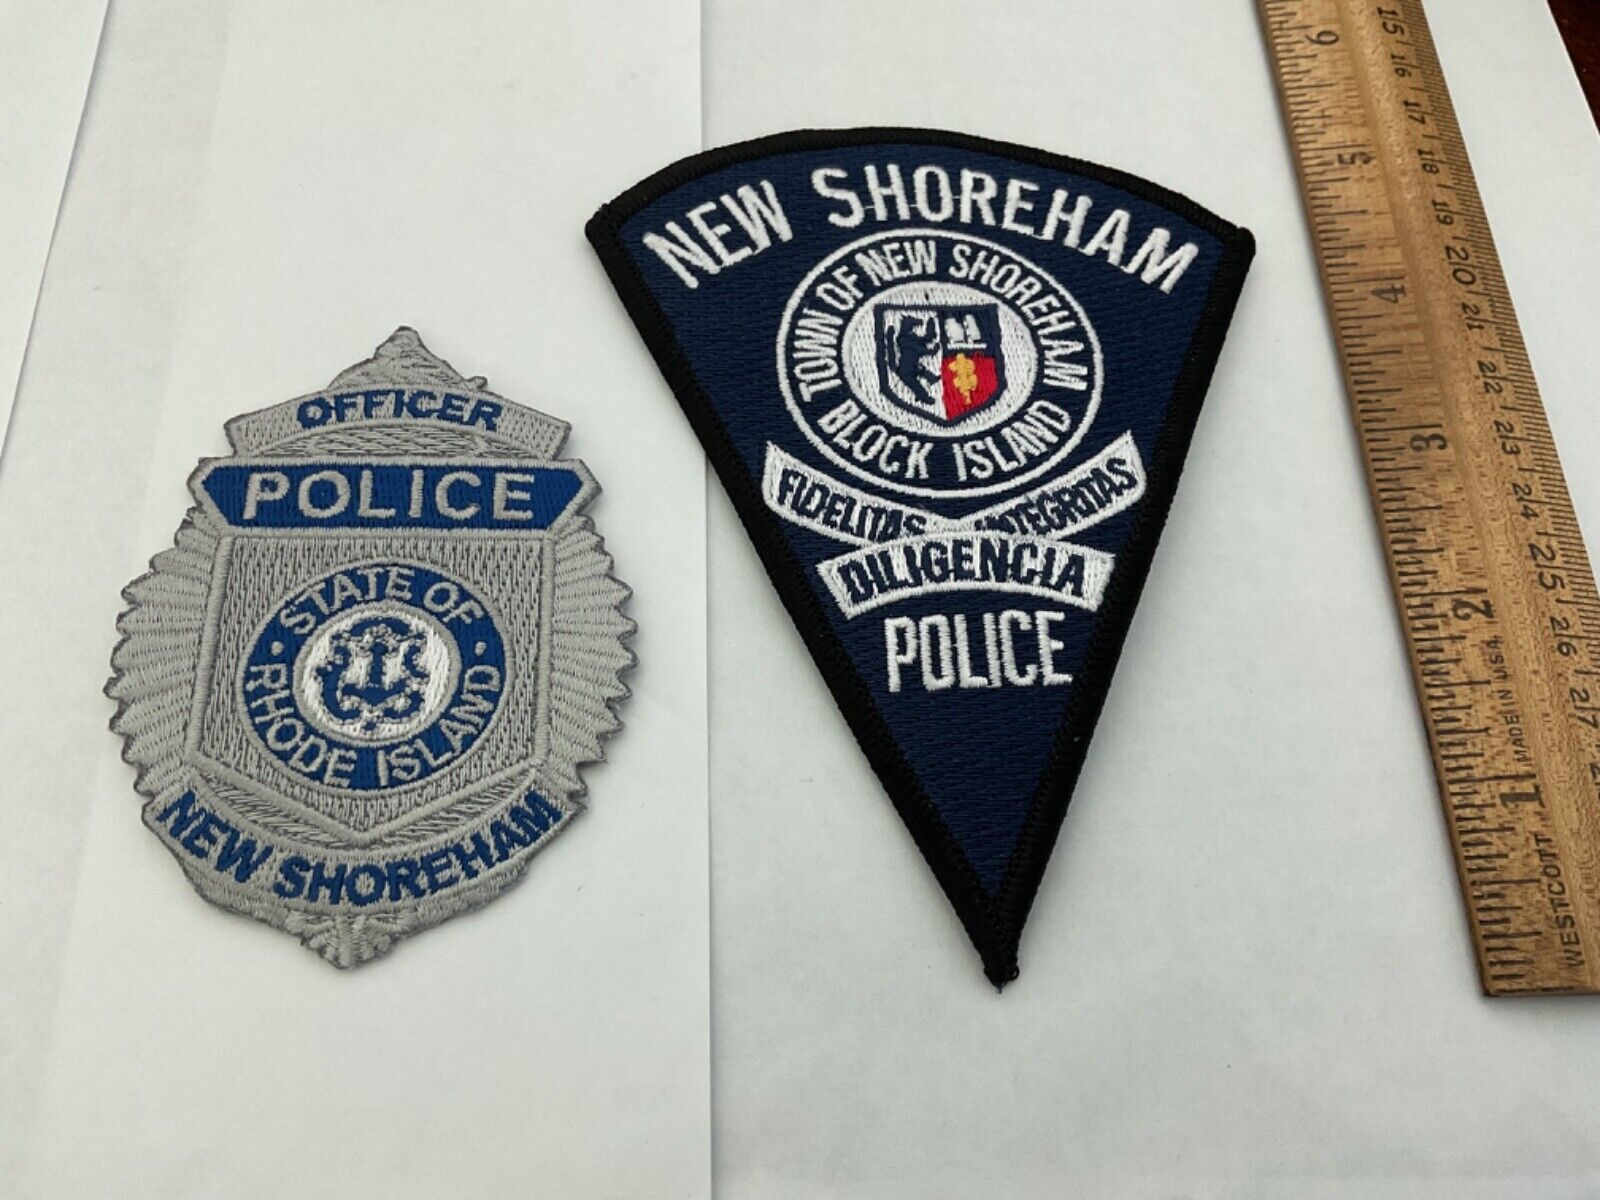 New Shoreham Police Block Island Rhode Island collectable patch set